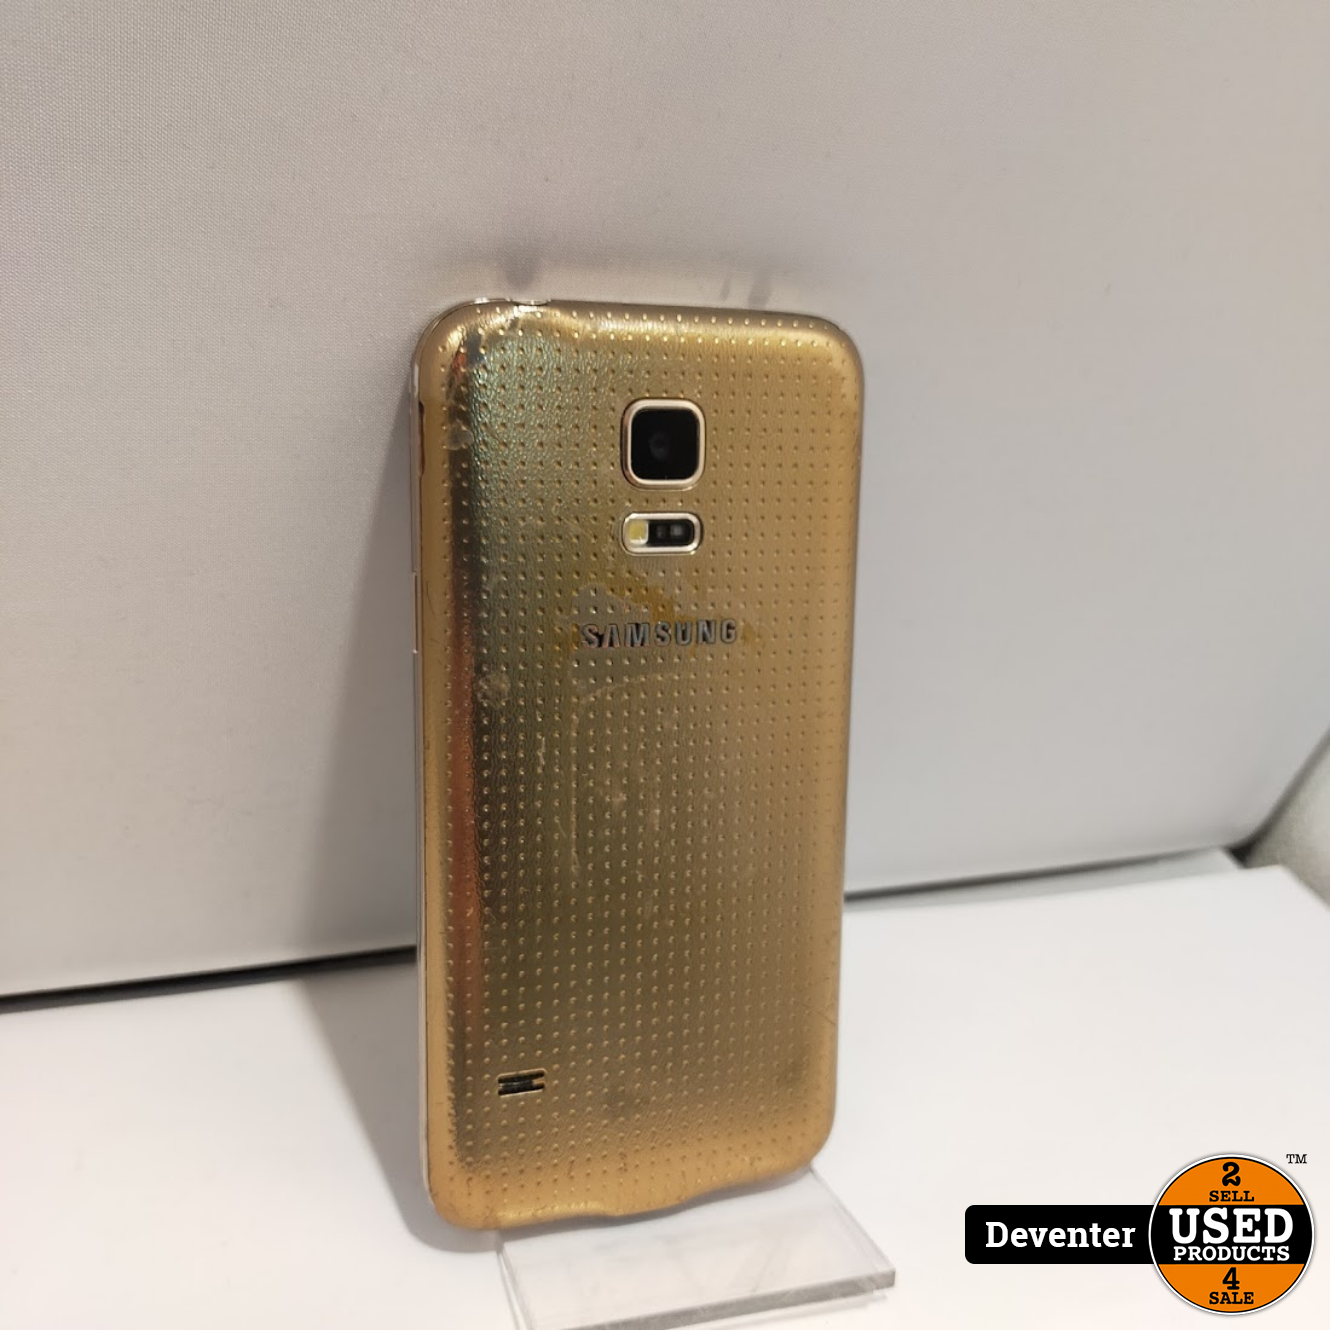 Samsung Mini Gold 16GB Nette - Products Deventer